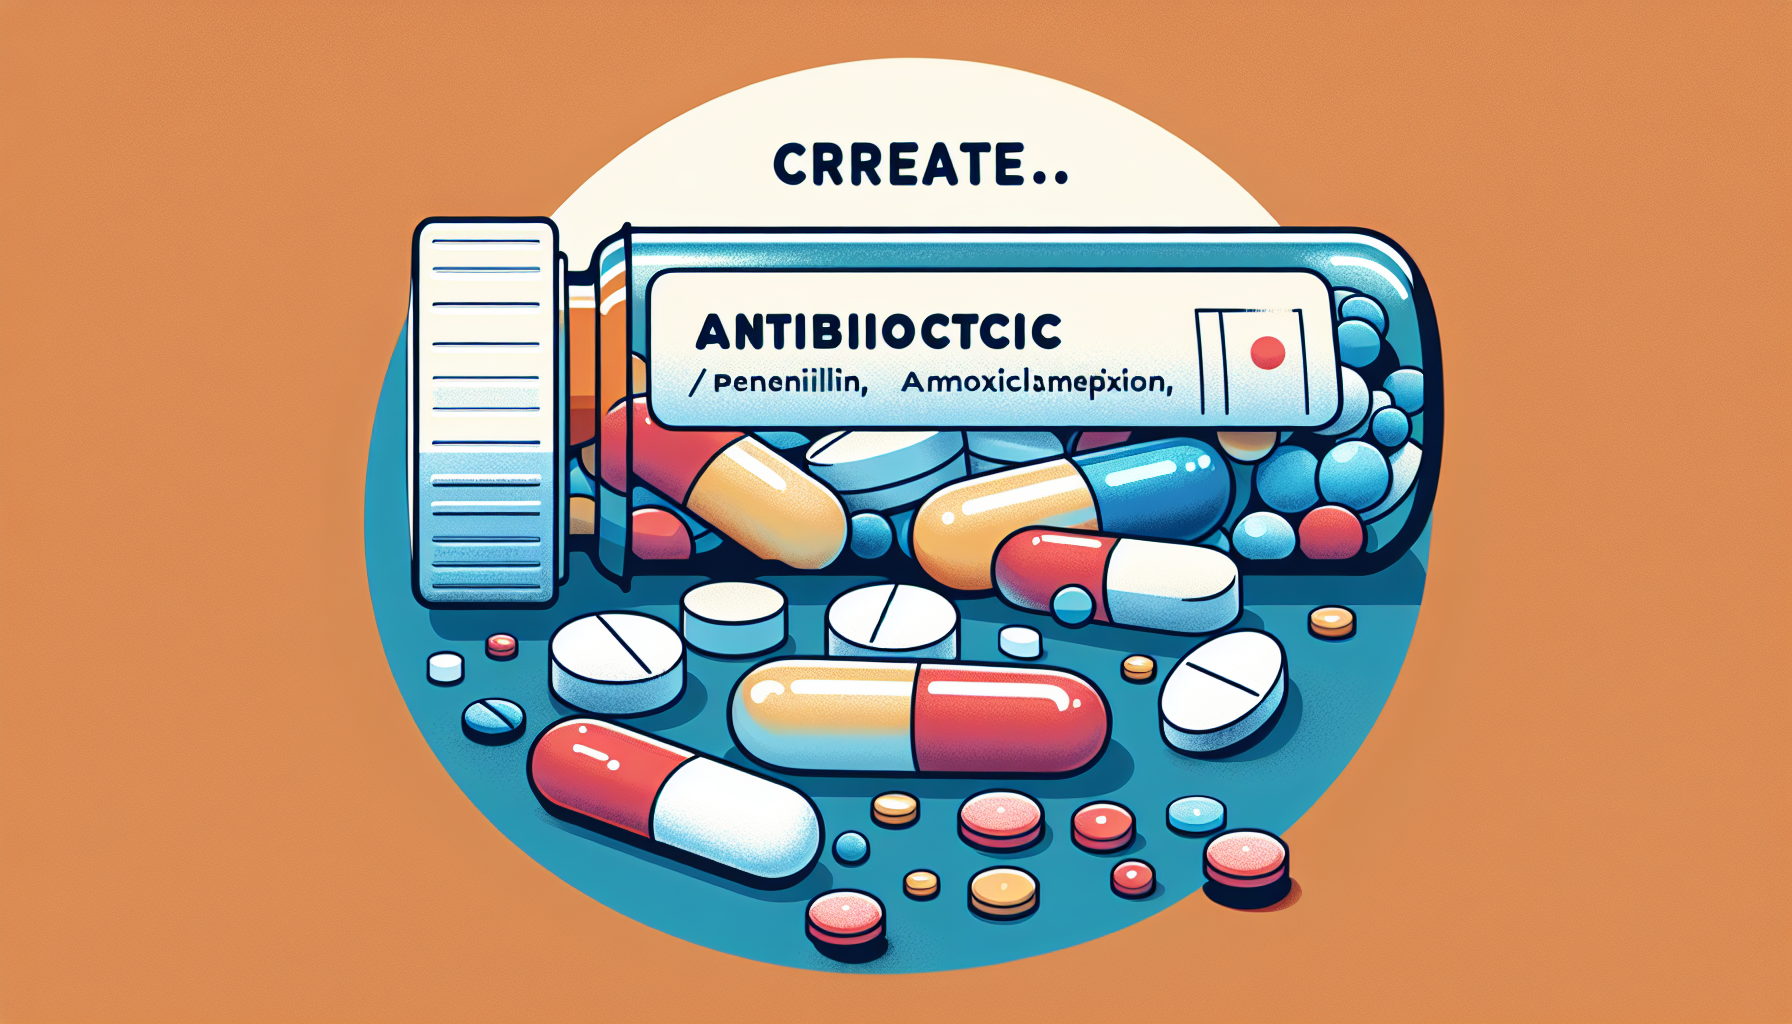 What Are The 3 Most Common Antibiotics?